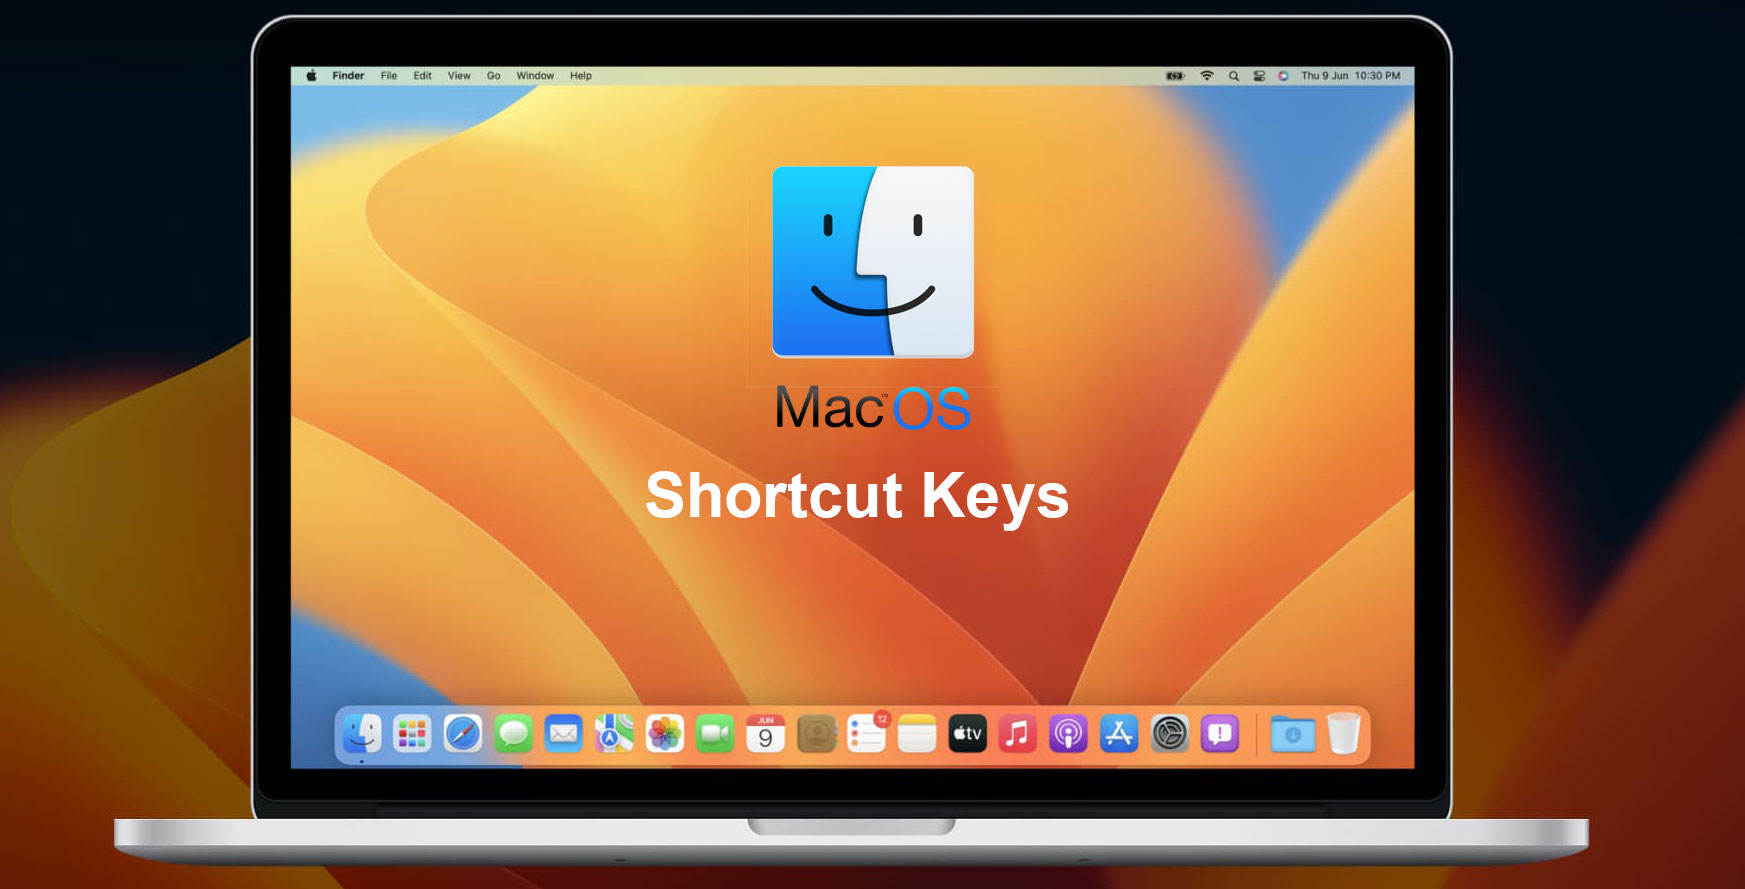 Mac OS(Operating System) keyboard shortcuts